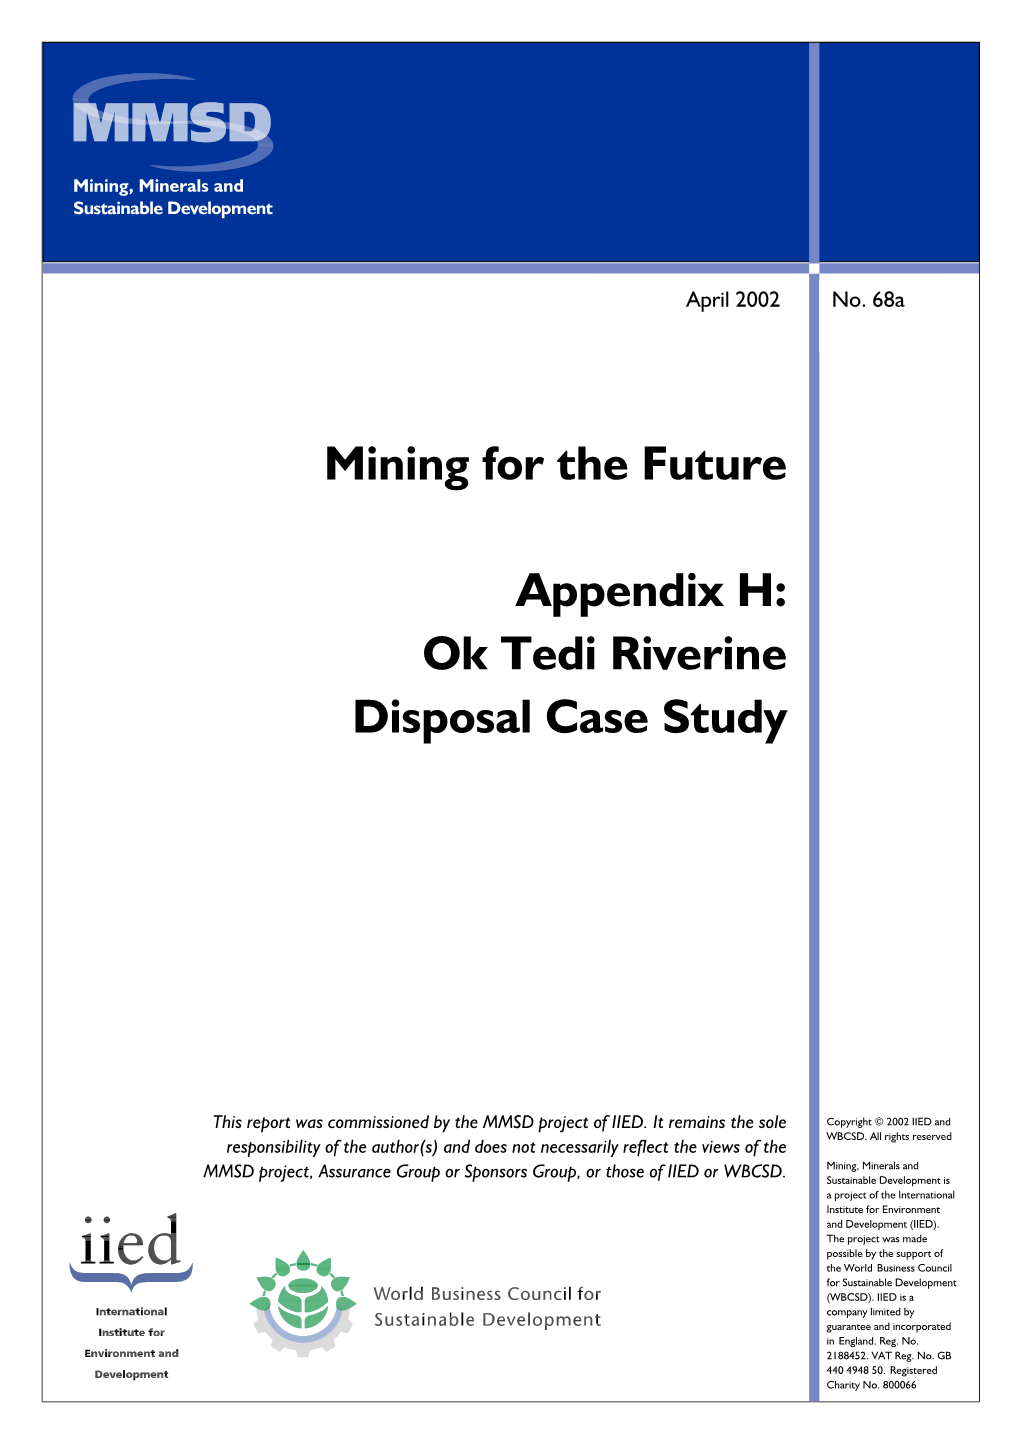 Mining for the Future. Appendix H: Ok Tedi Riverine Disposal Case Study